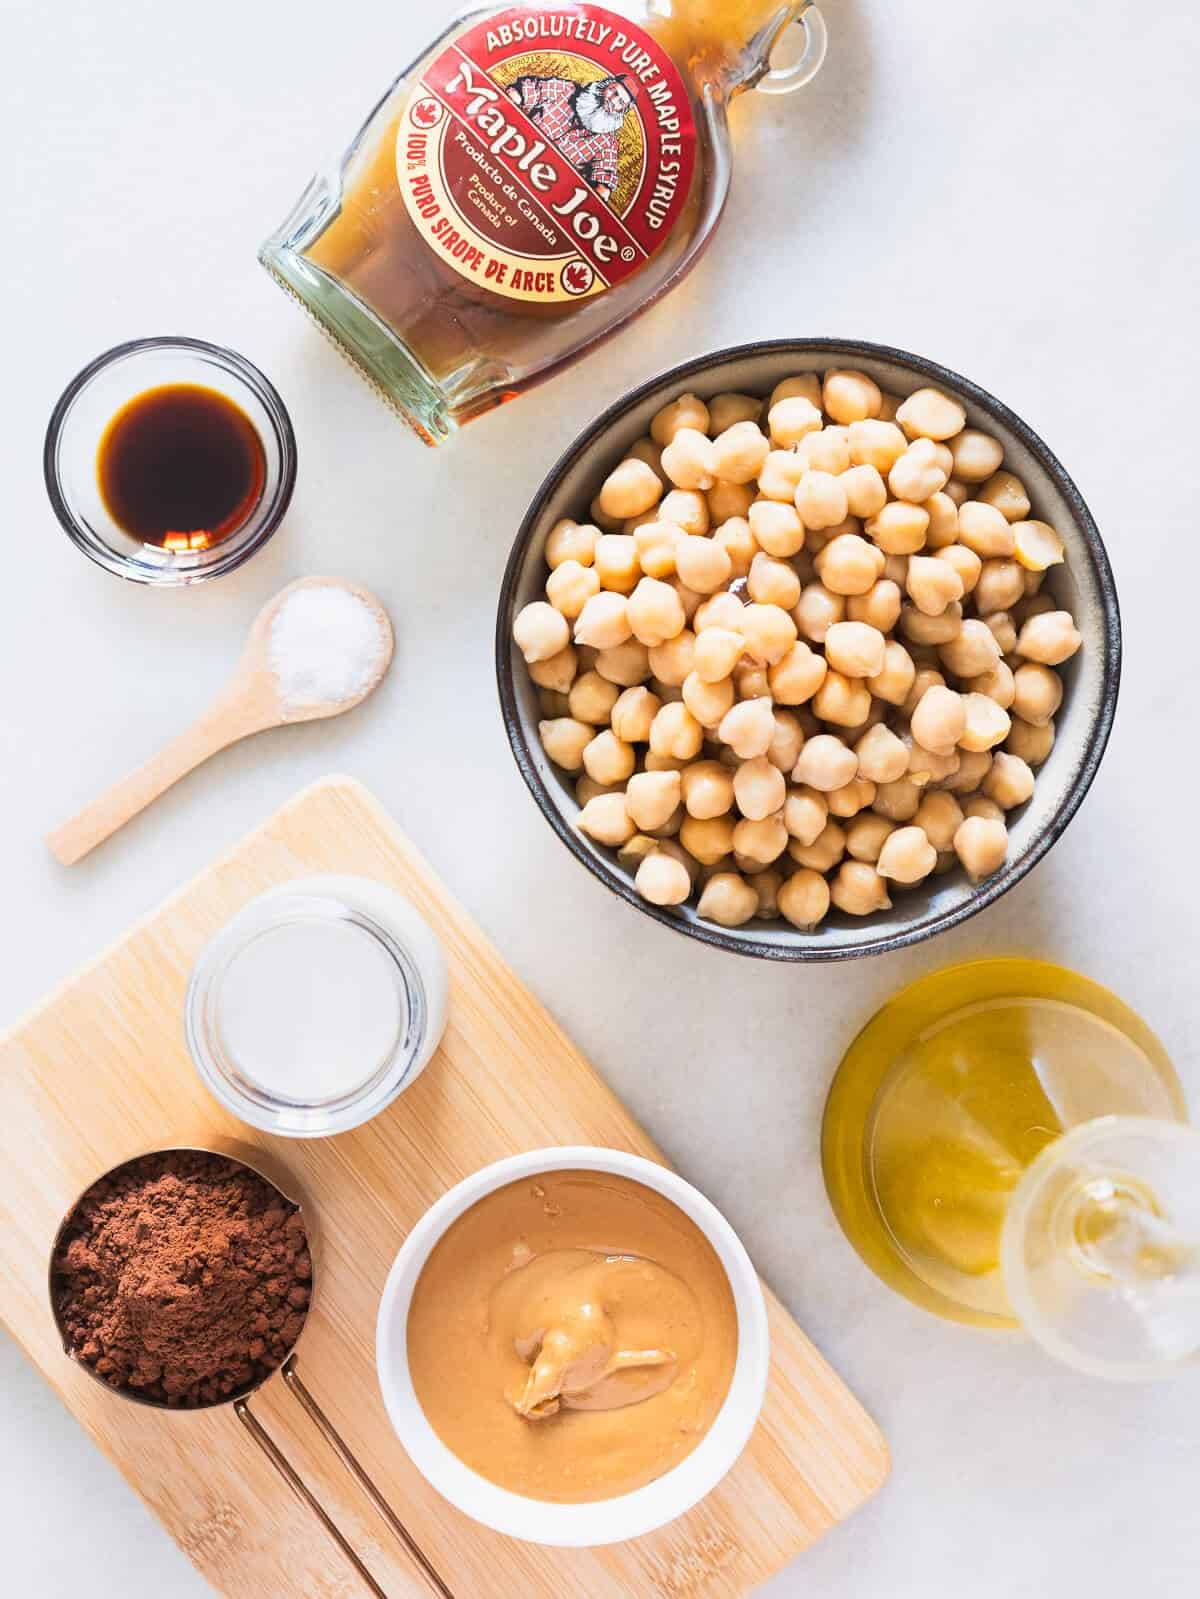 ingredients ti make a dark chocolate hummus.